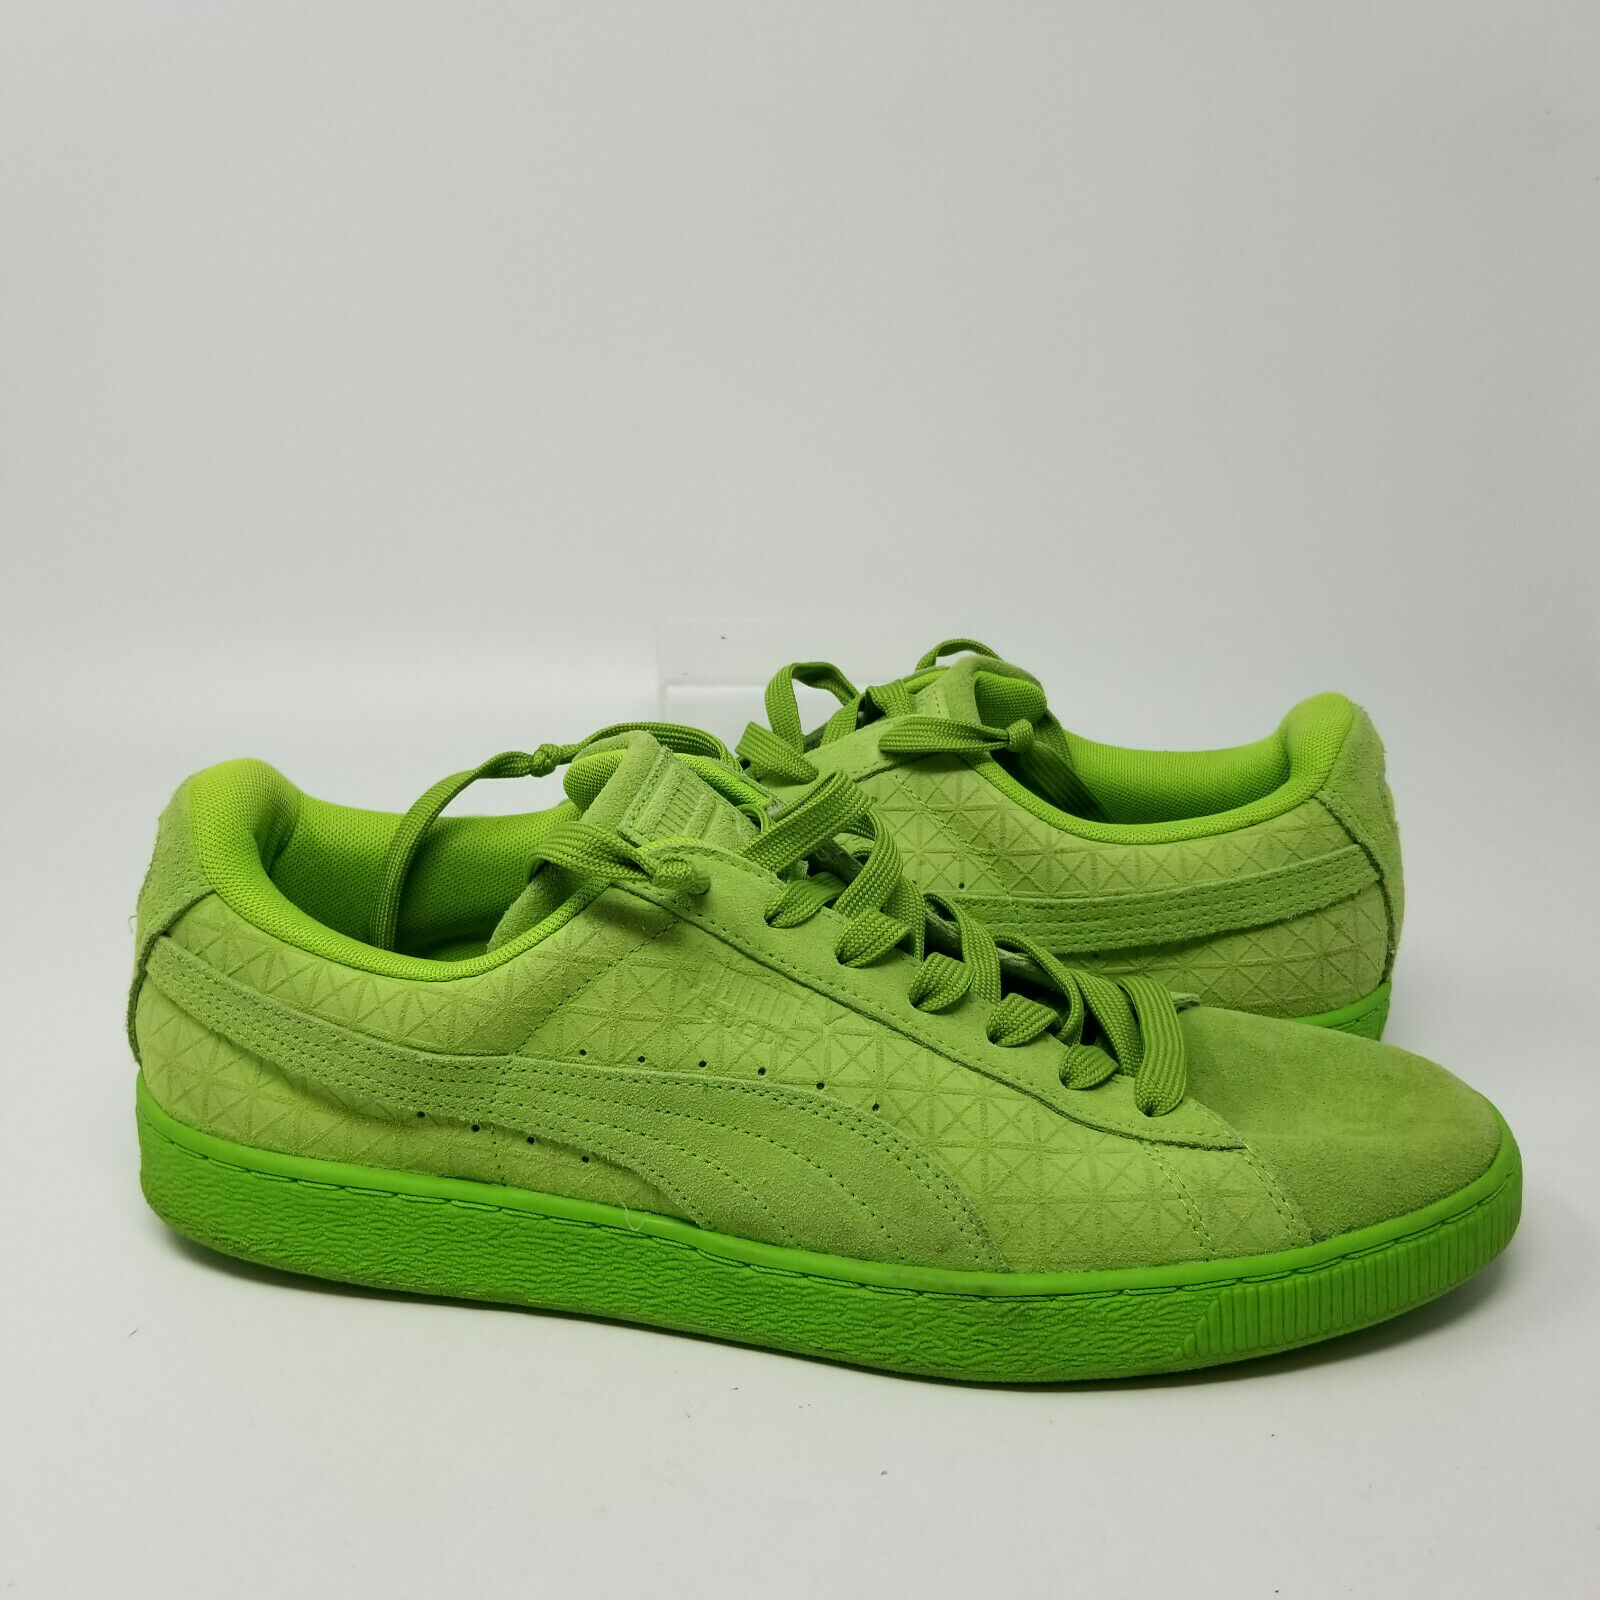 Puma Suede Green Lace Up Comfort Walking Tennis Shoes Sneaker Men Size 13